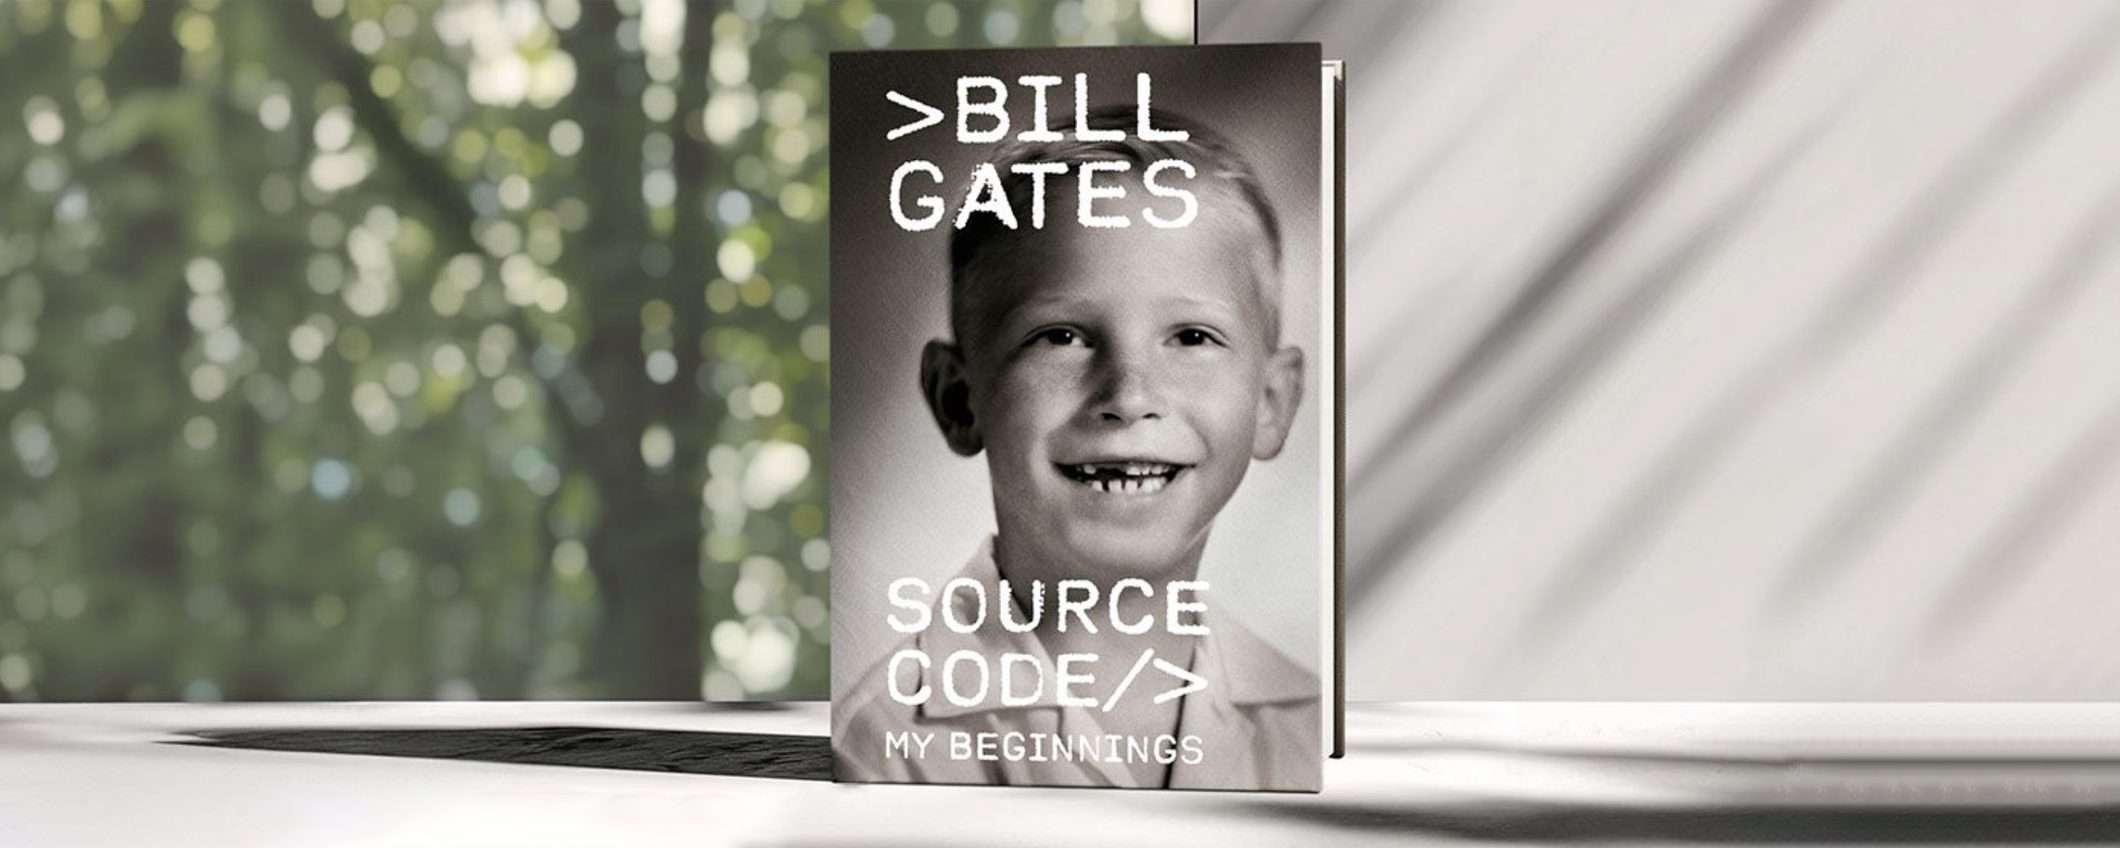 Bill Gates bambino si racconta nel libro Source Code